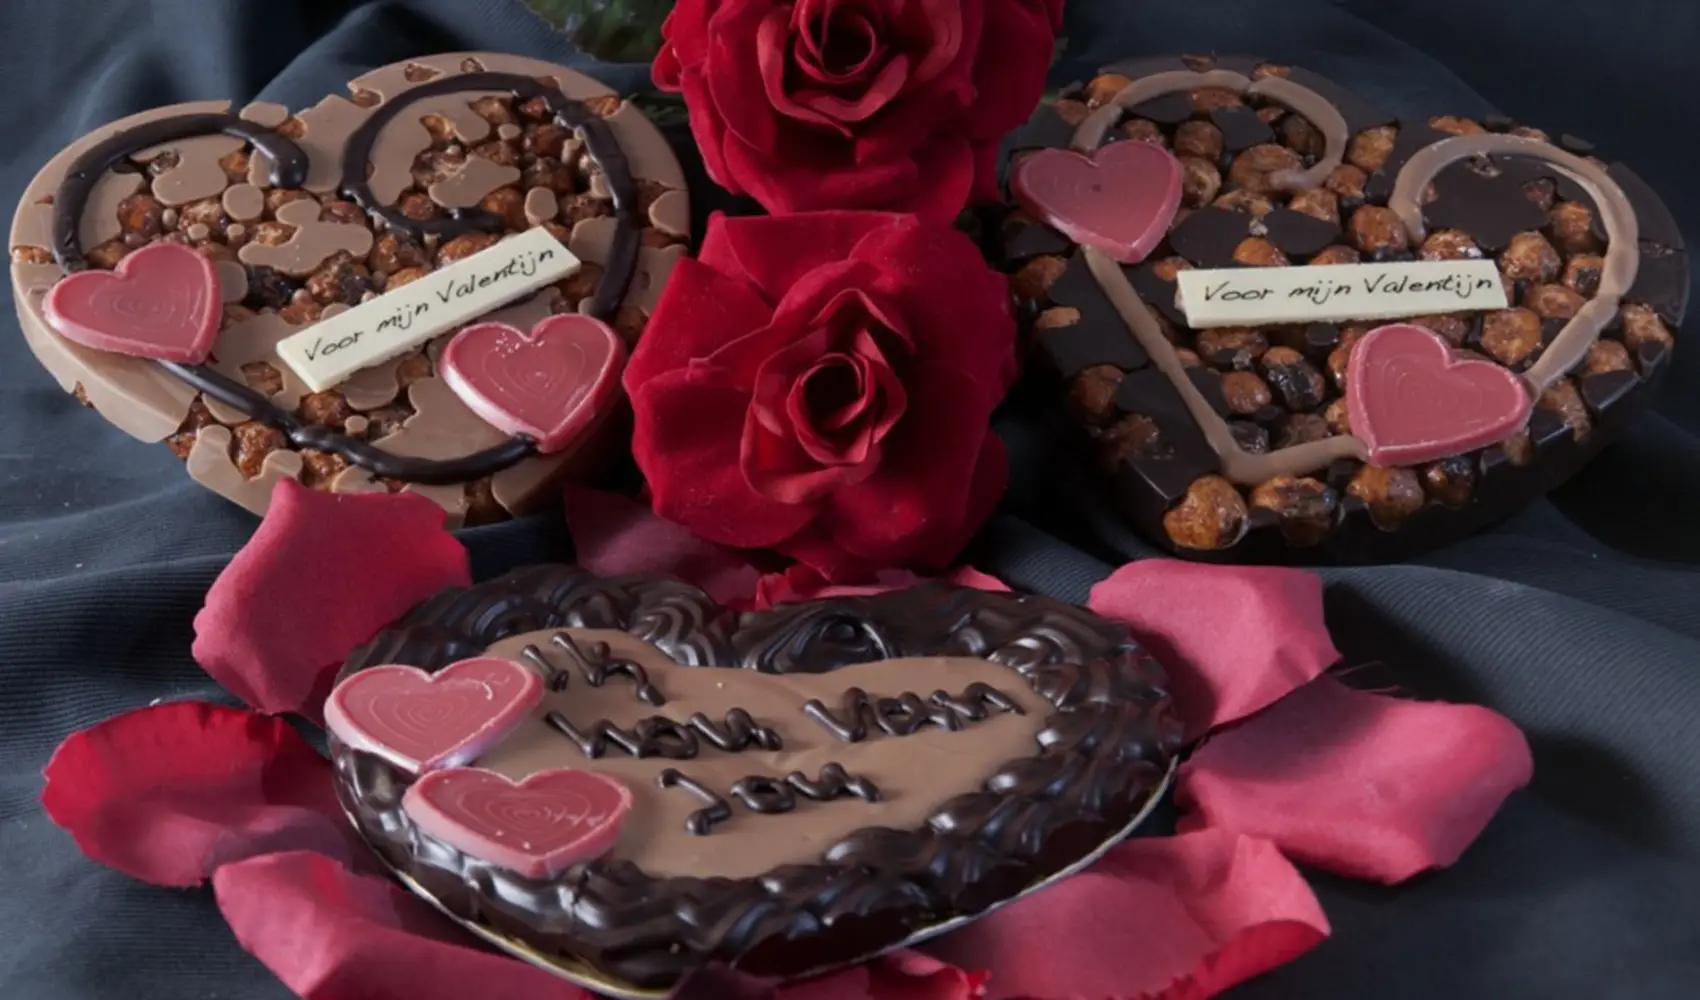 bonbon.nl-chocolatier-janson-zutphen-valentijn-cadeau-hart-chocolade-1024x609 copy